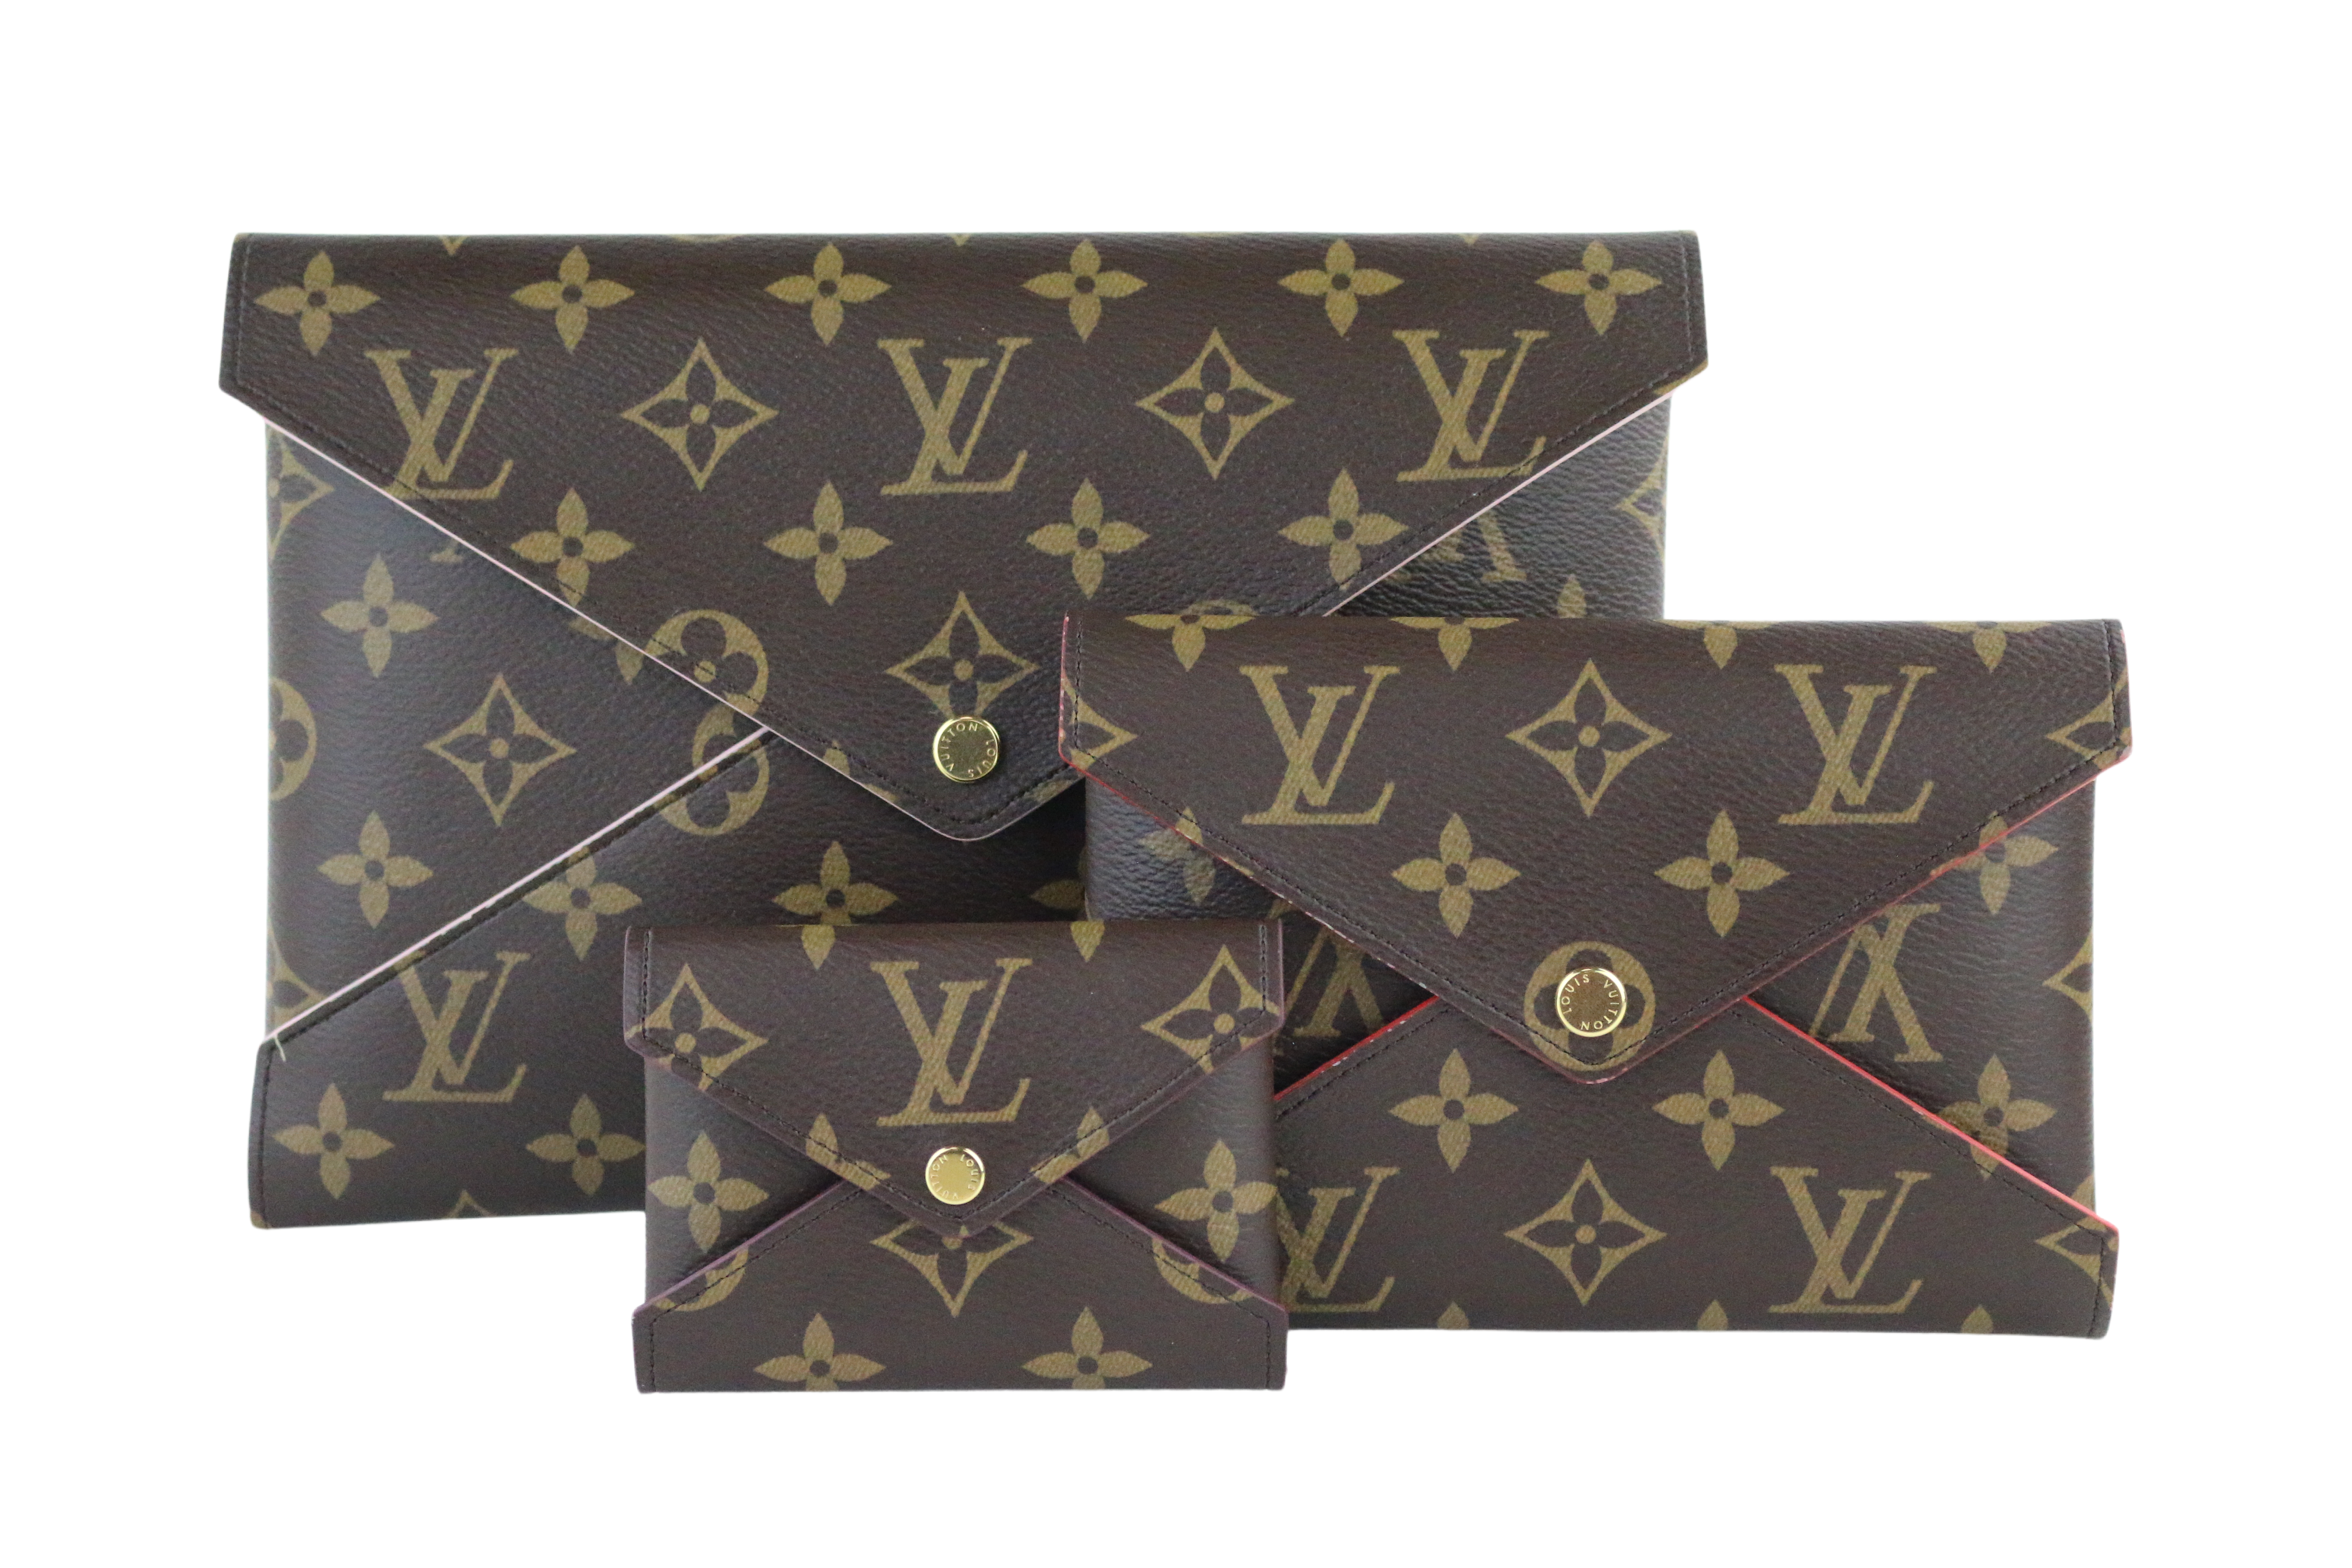 Louis Vuitton Pochette Kirigami Monogram - New* - SOLD